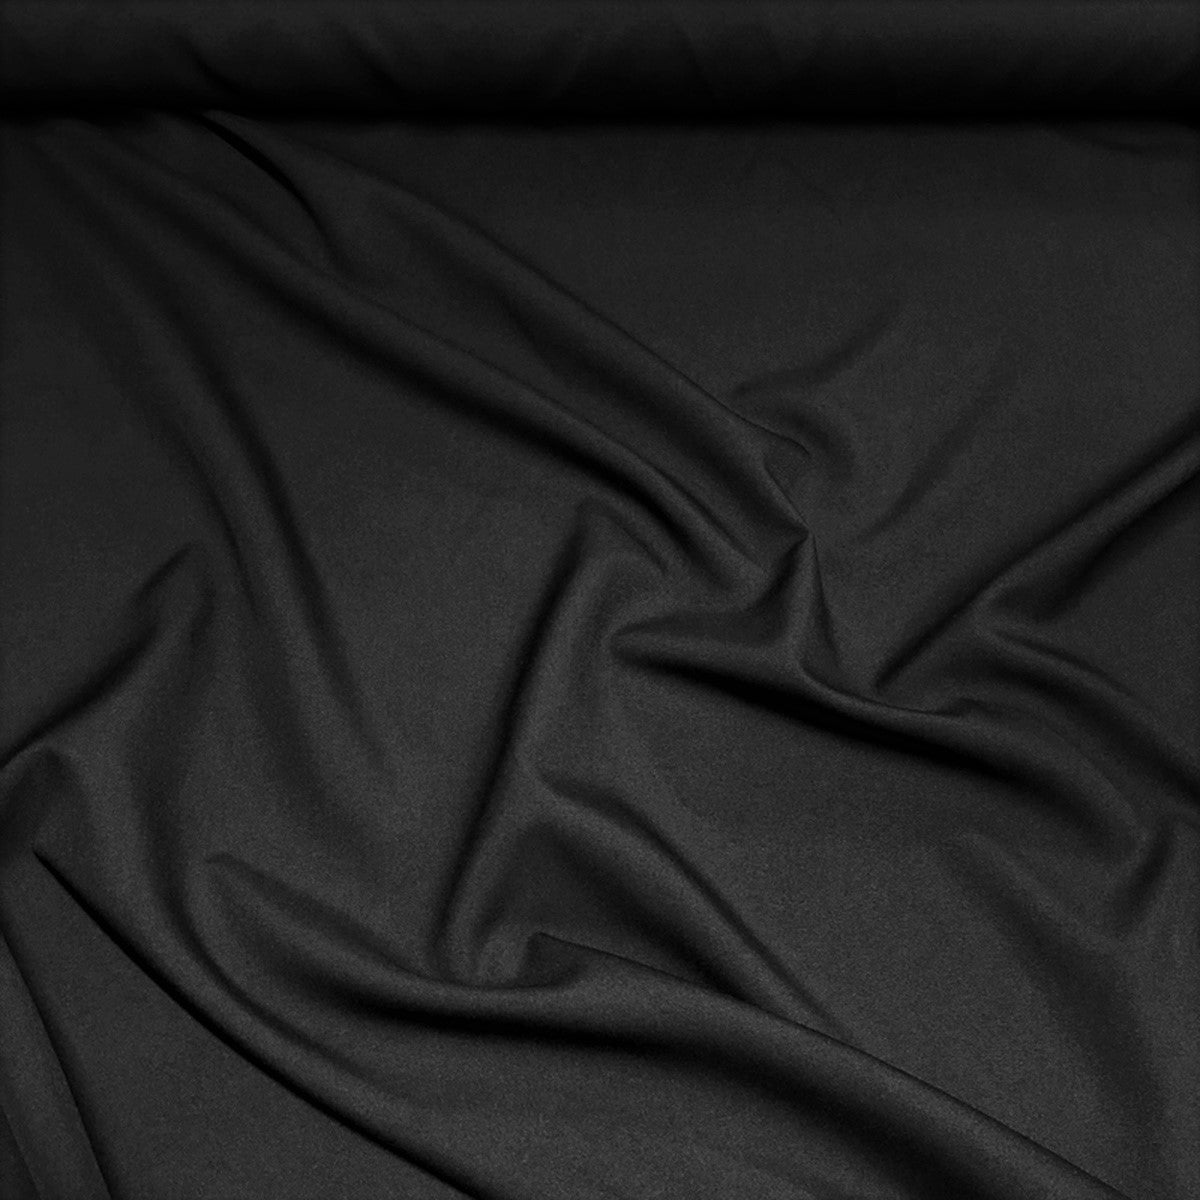 Wholesale Stretch Panne Velvet Fabric Black 100 yard roll